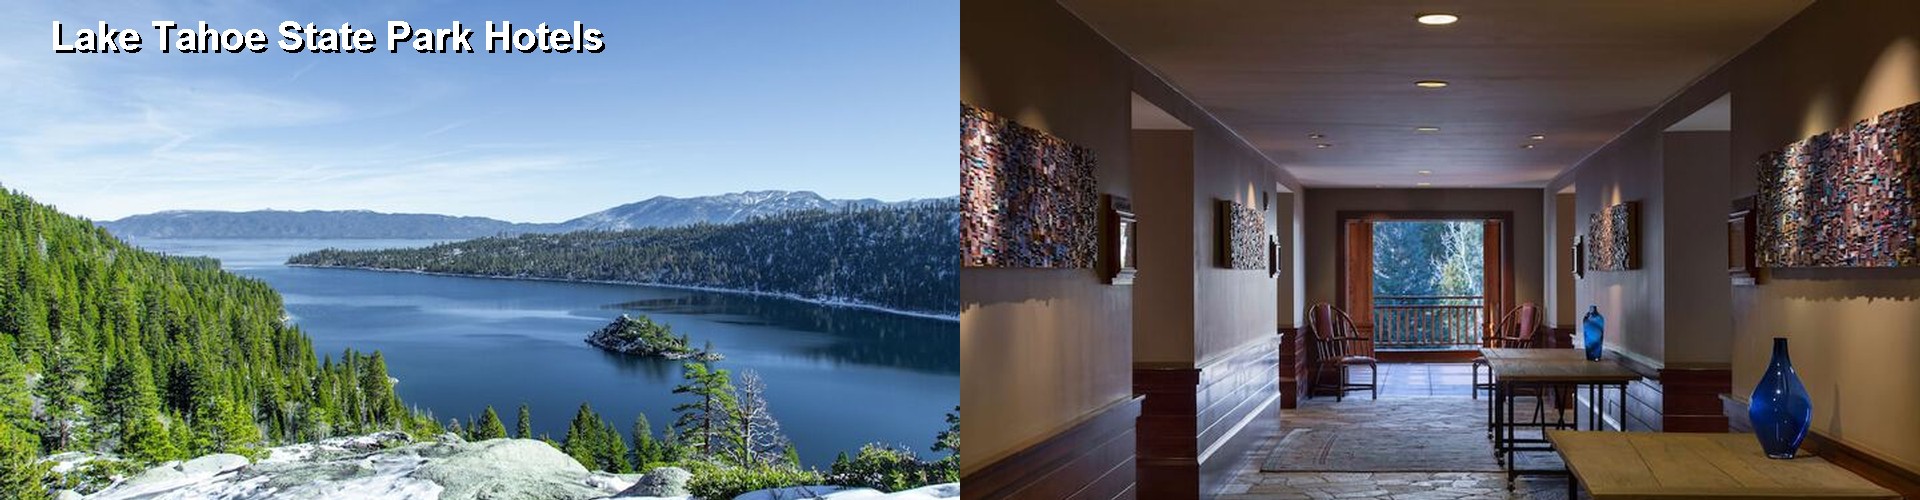 5 Best Hotels near Lake Tahoe State Park